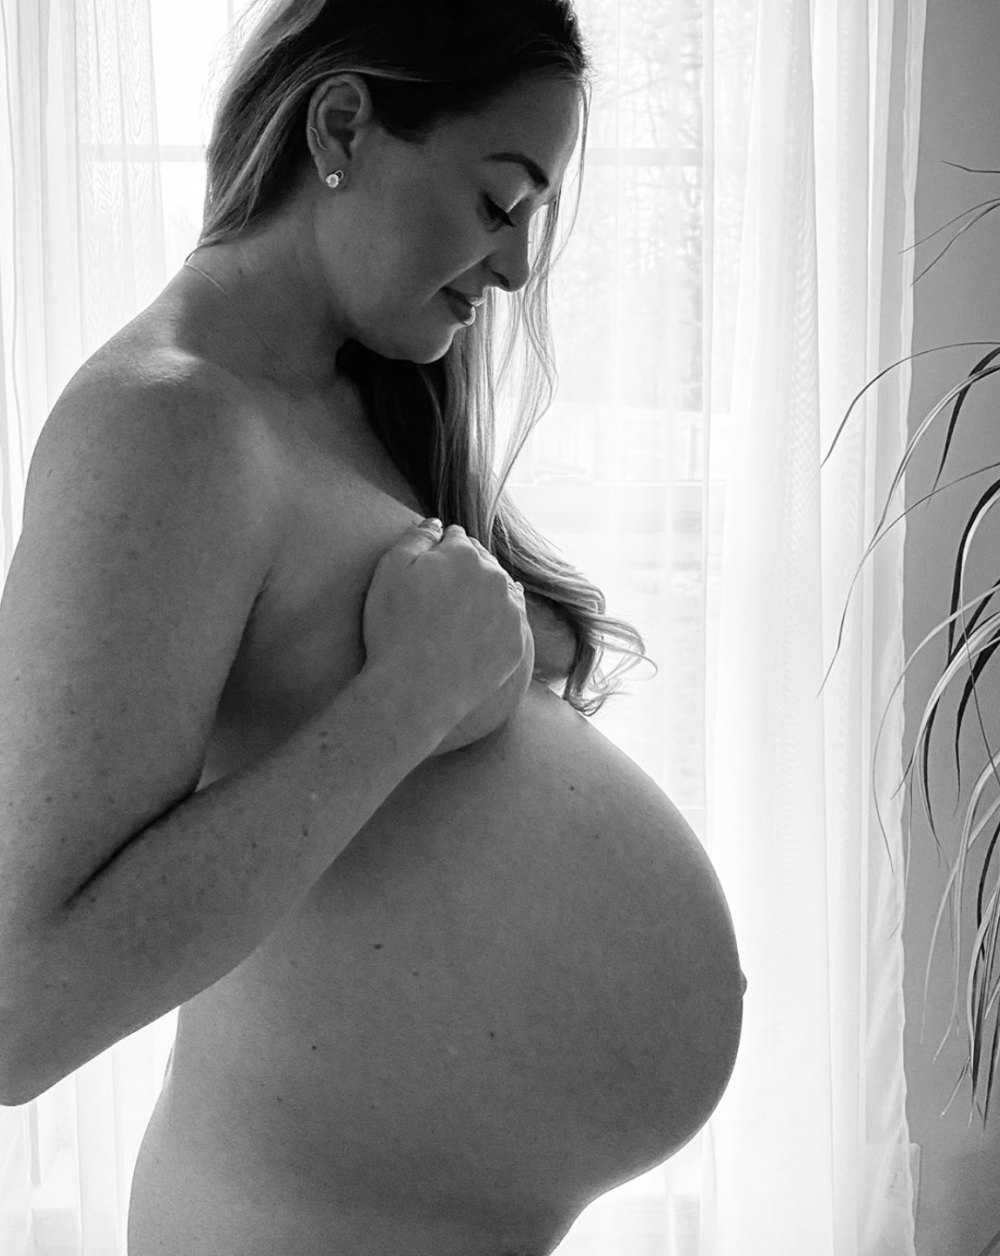 39-Weeks-Pregnant Jamie Otis Shares Naked Baby Bump Pics Ahead of Baby Boy’s Birth